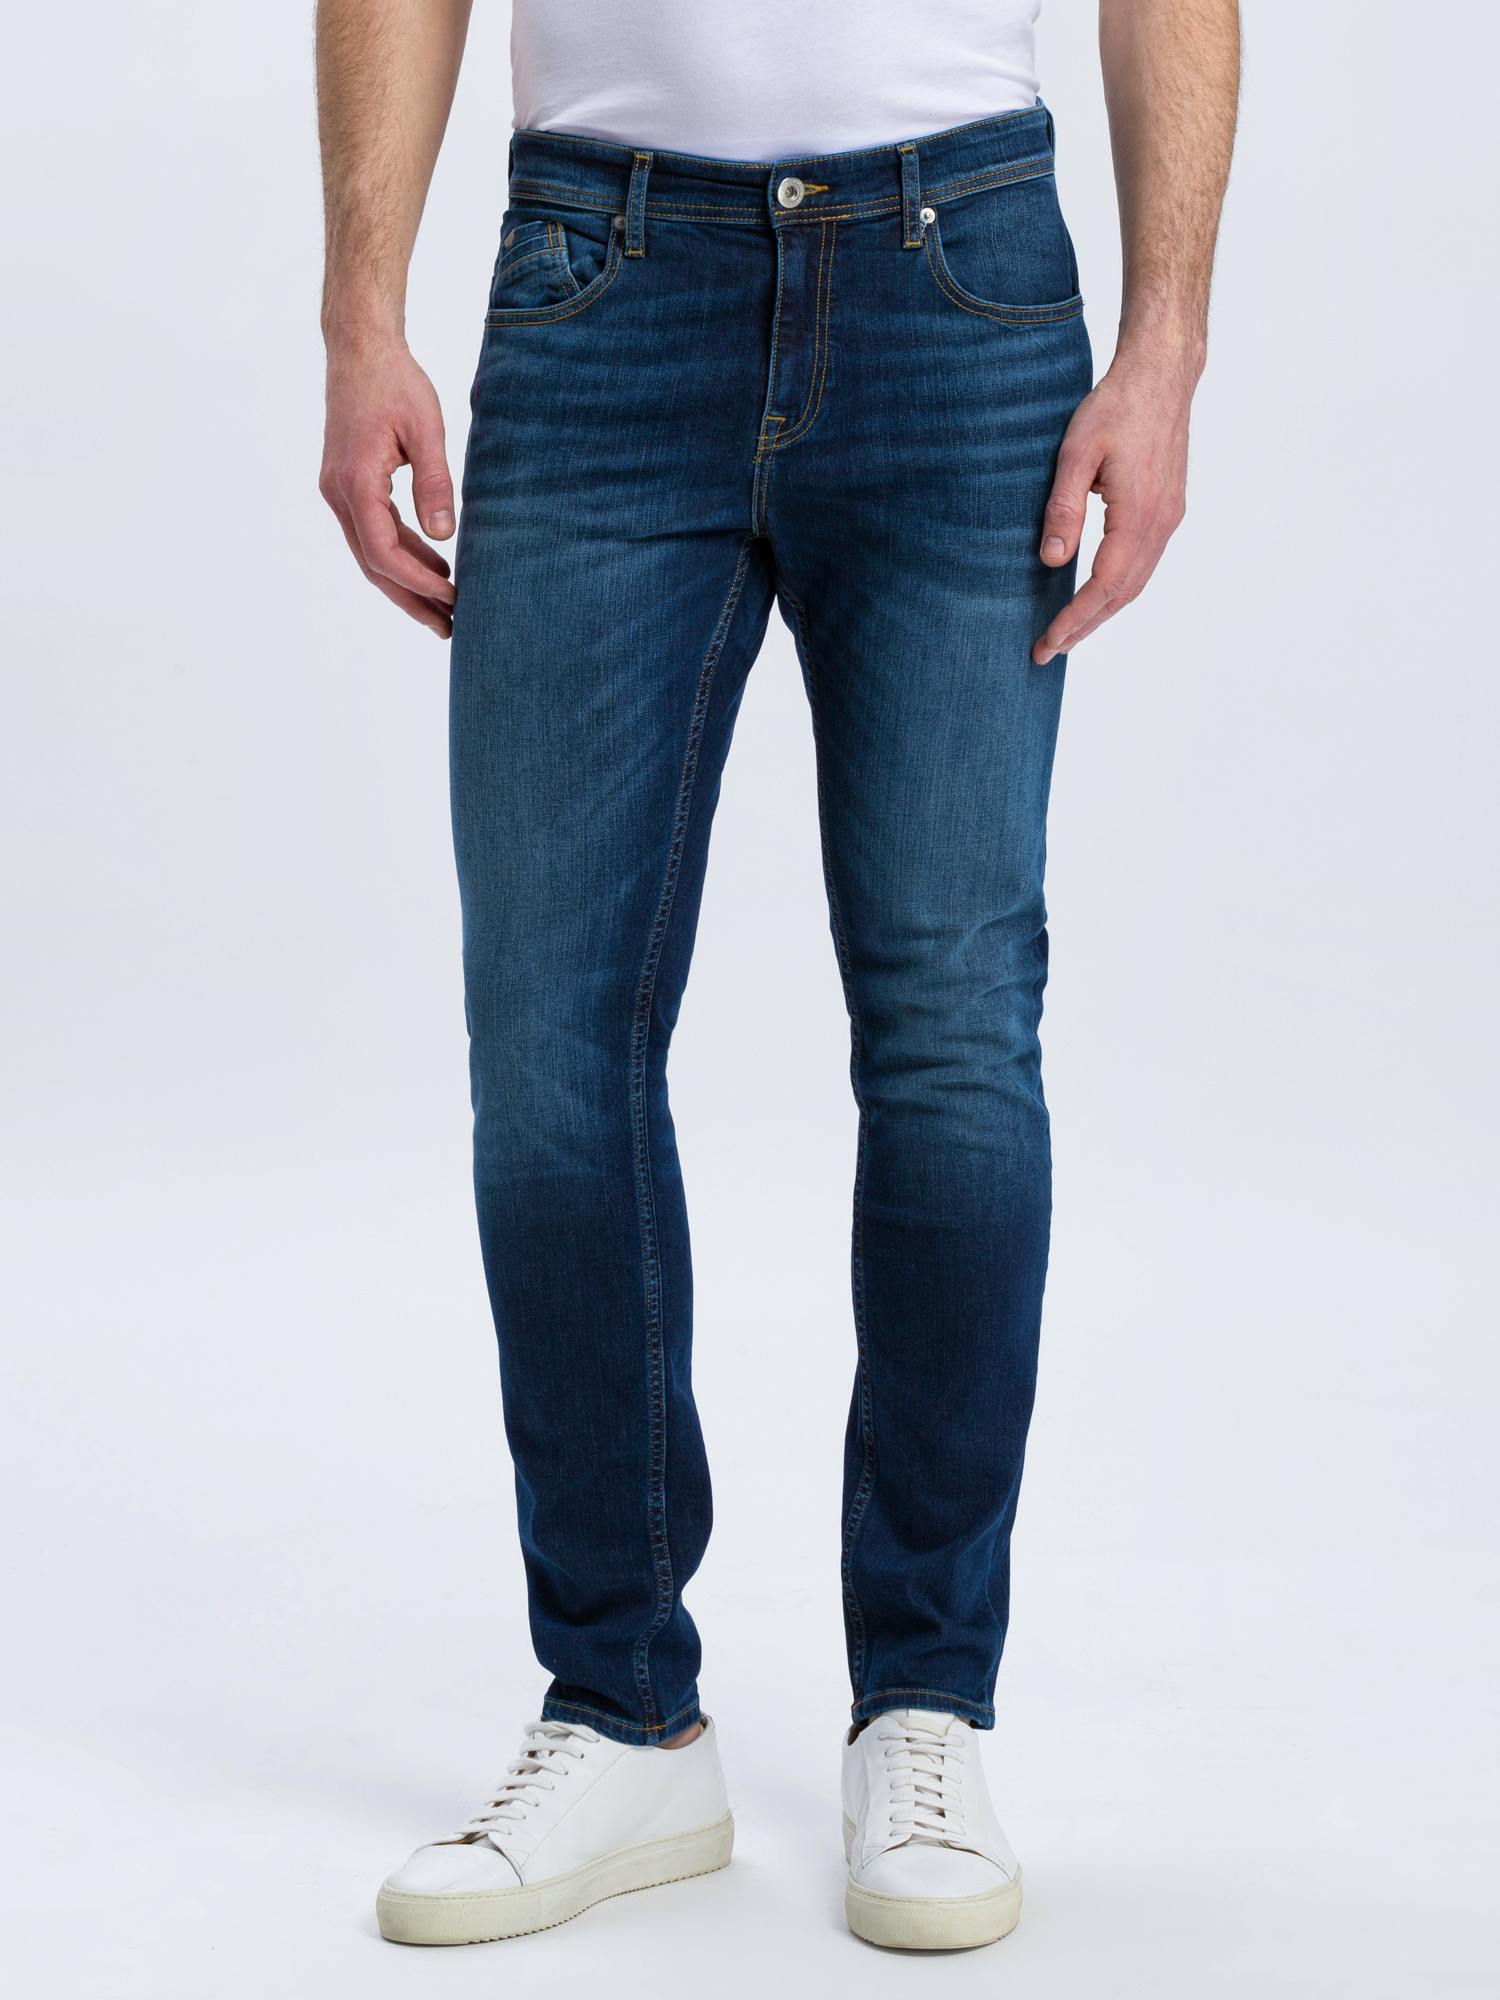 Image of Cross Jeans Jimi 5 Pocket Pants dark blue